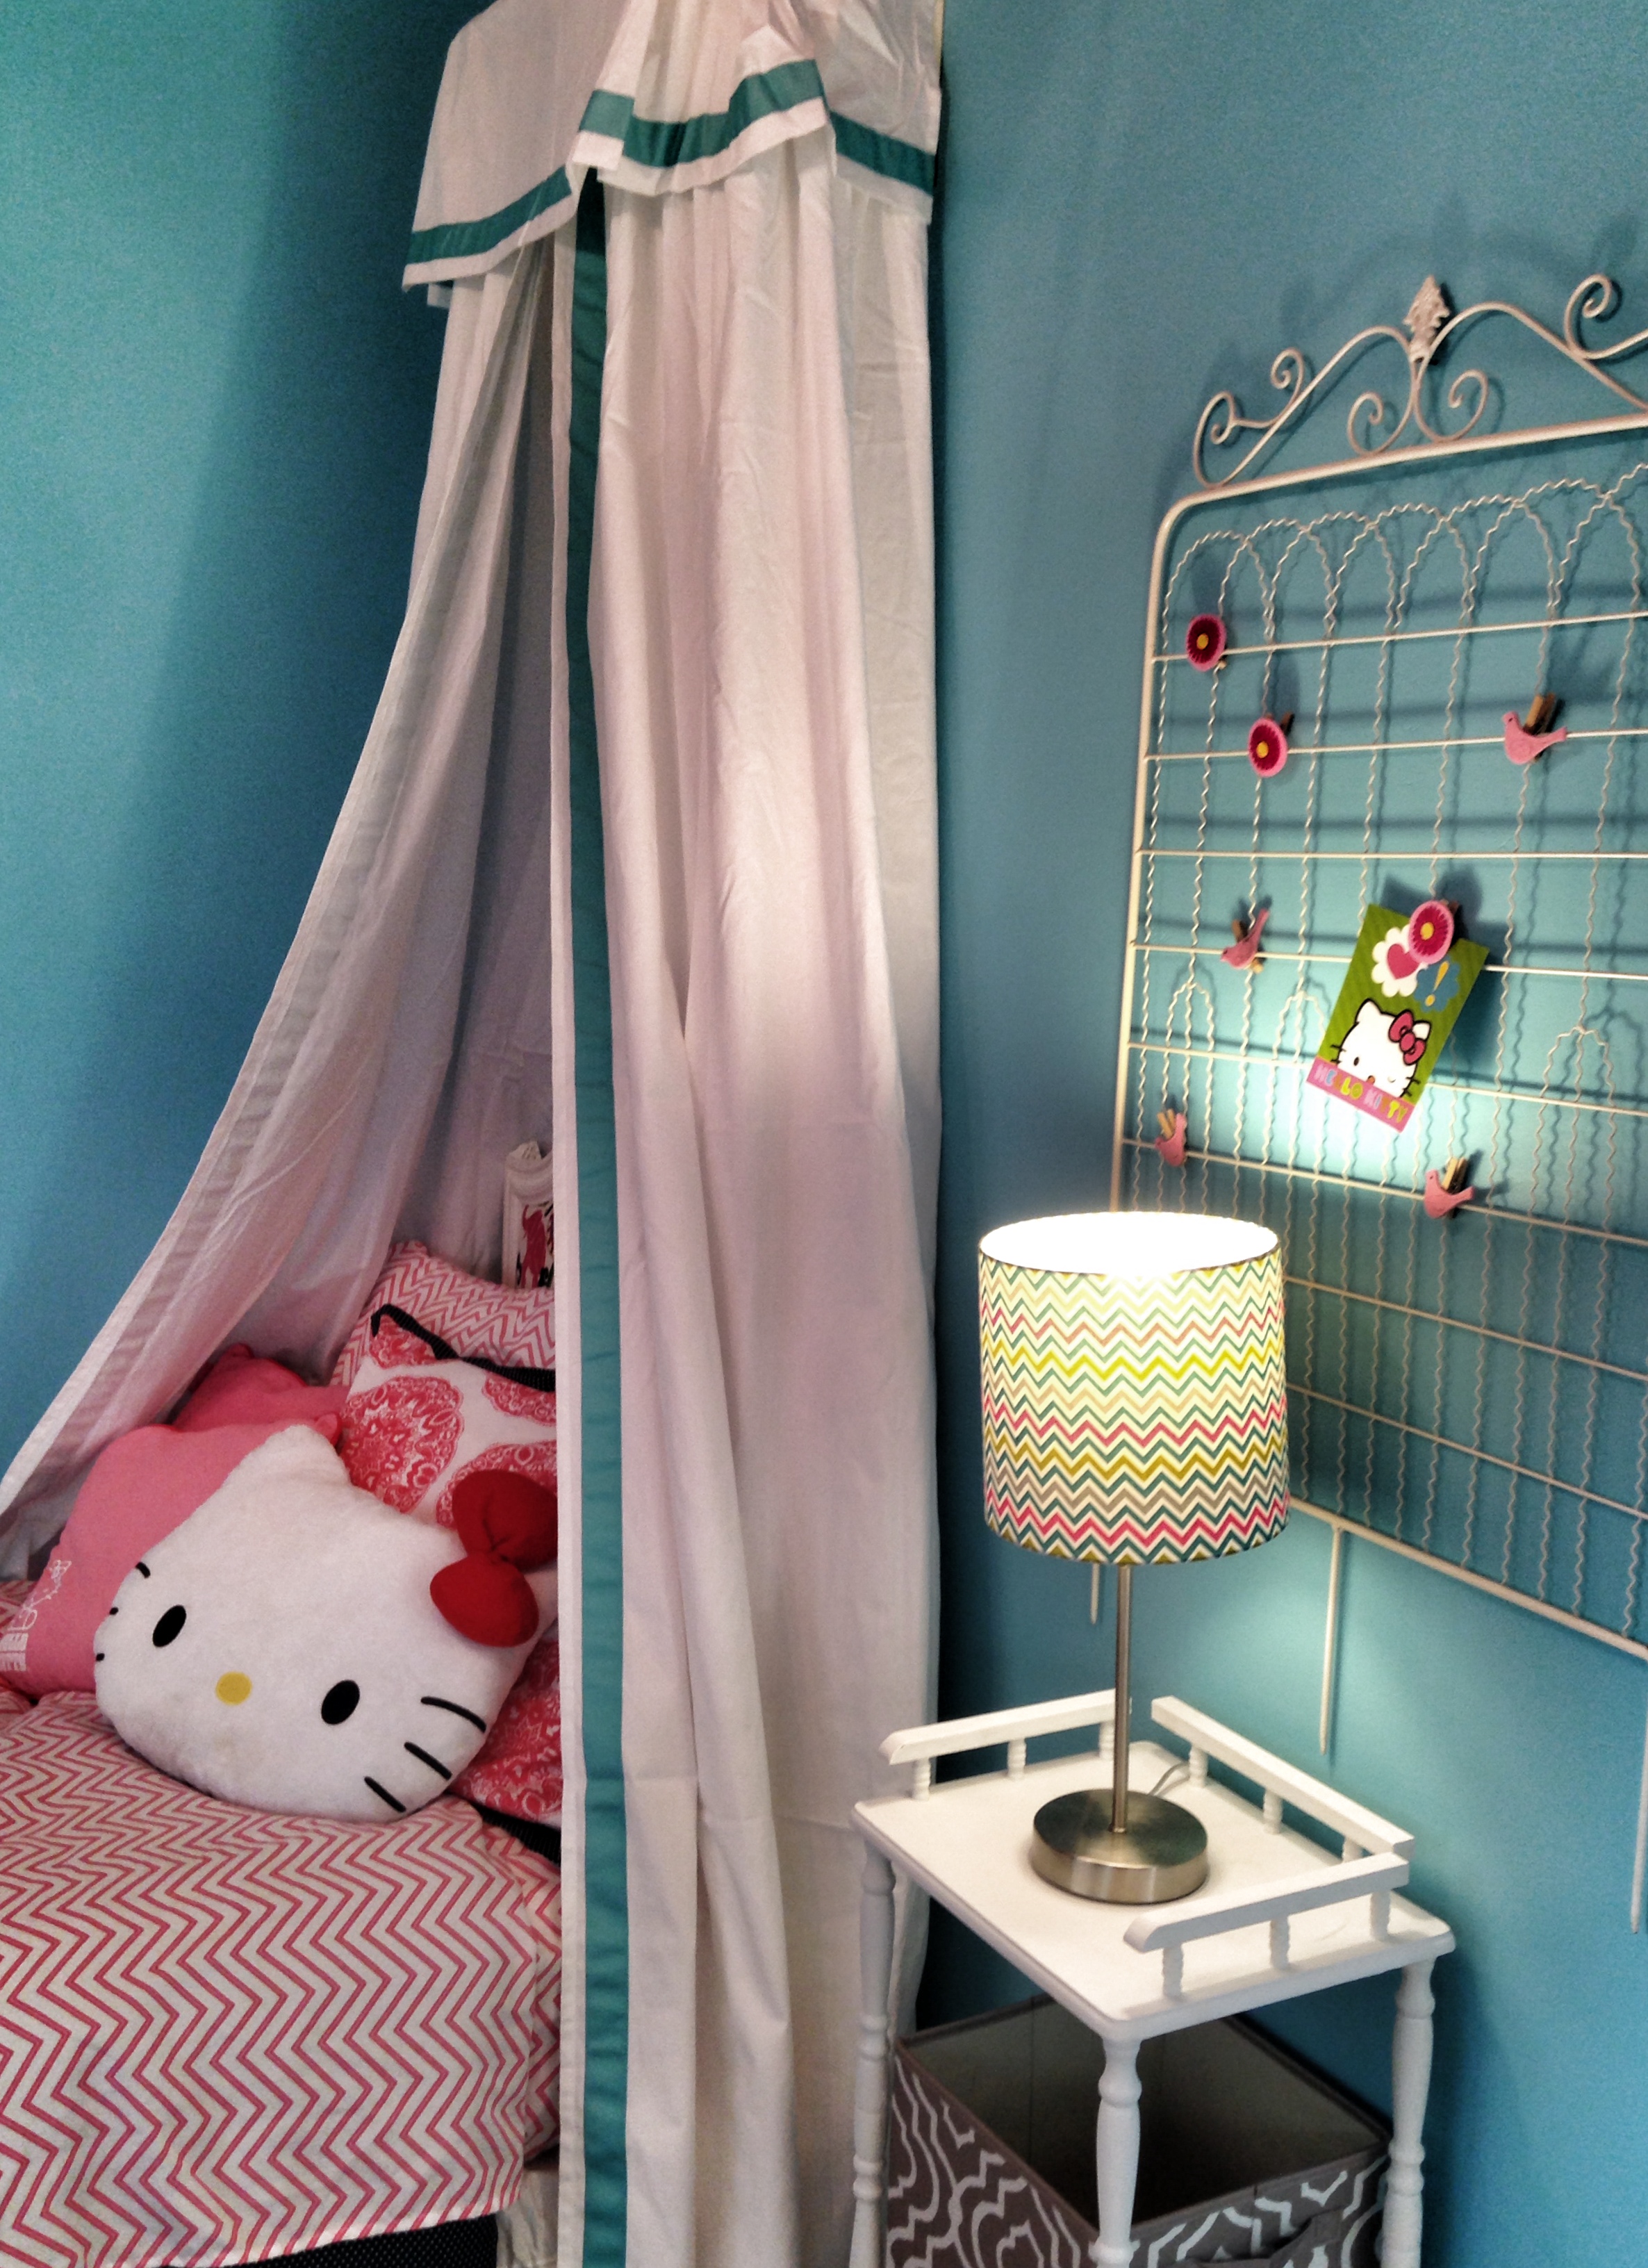 HELLO KITTY Girls Bedroom Baby Nursery Wall Decal Decor